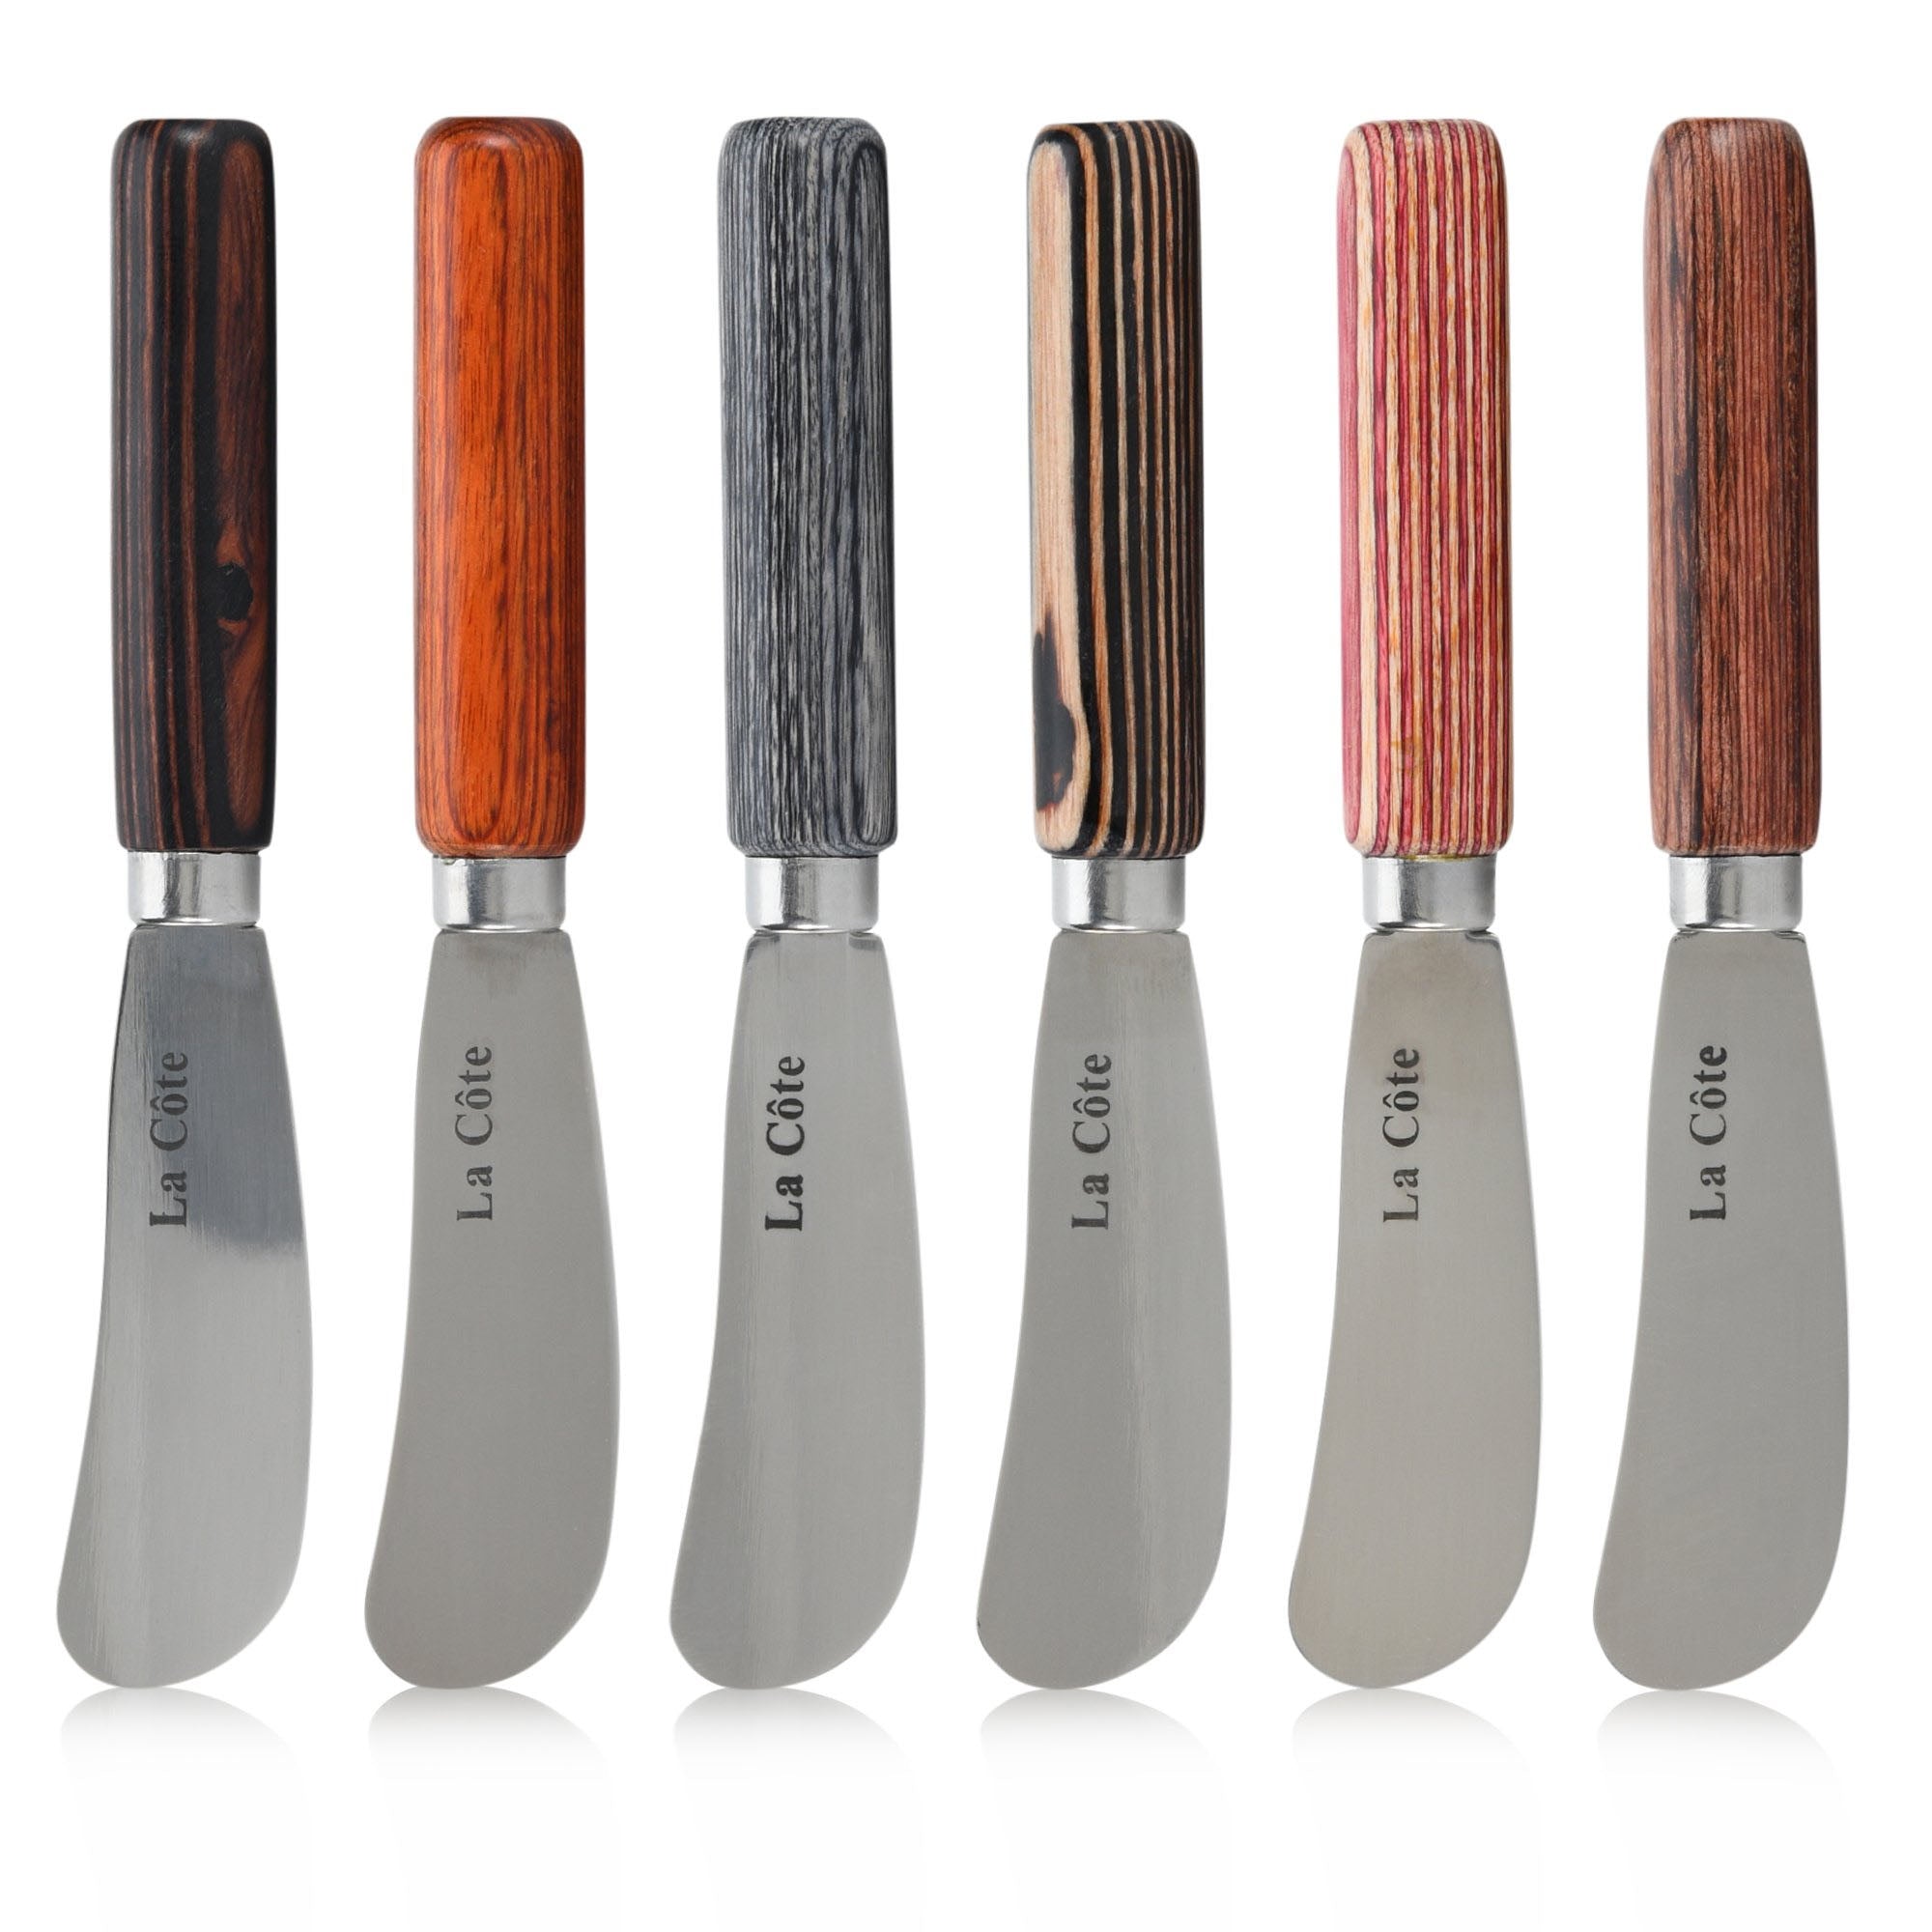 La Cote 6 Piece Cheese Knife Spreader Set Stainless Steel Blade Pakka Wood Handle (5 Inch in Mini Barrel)